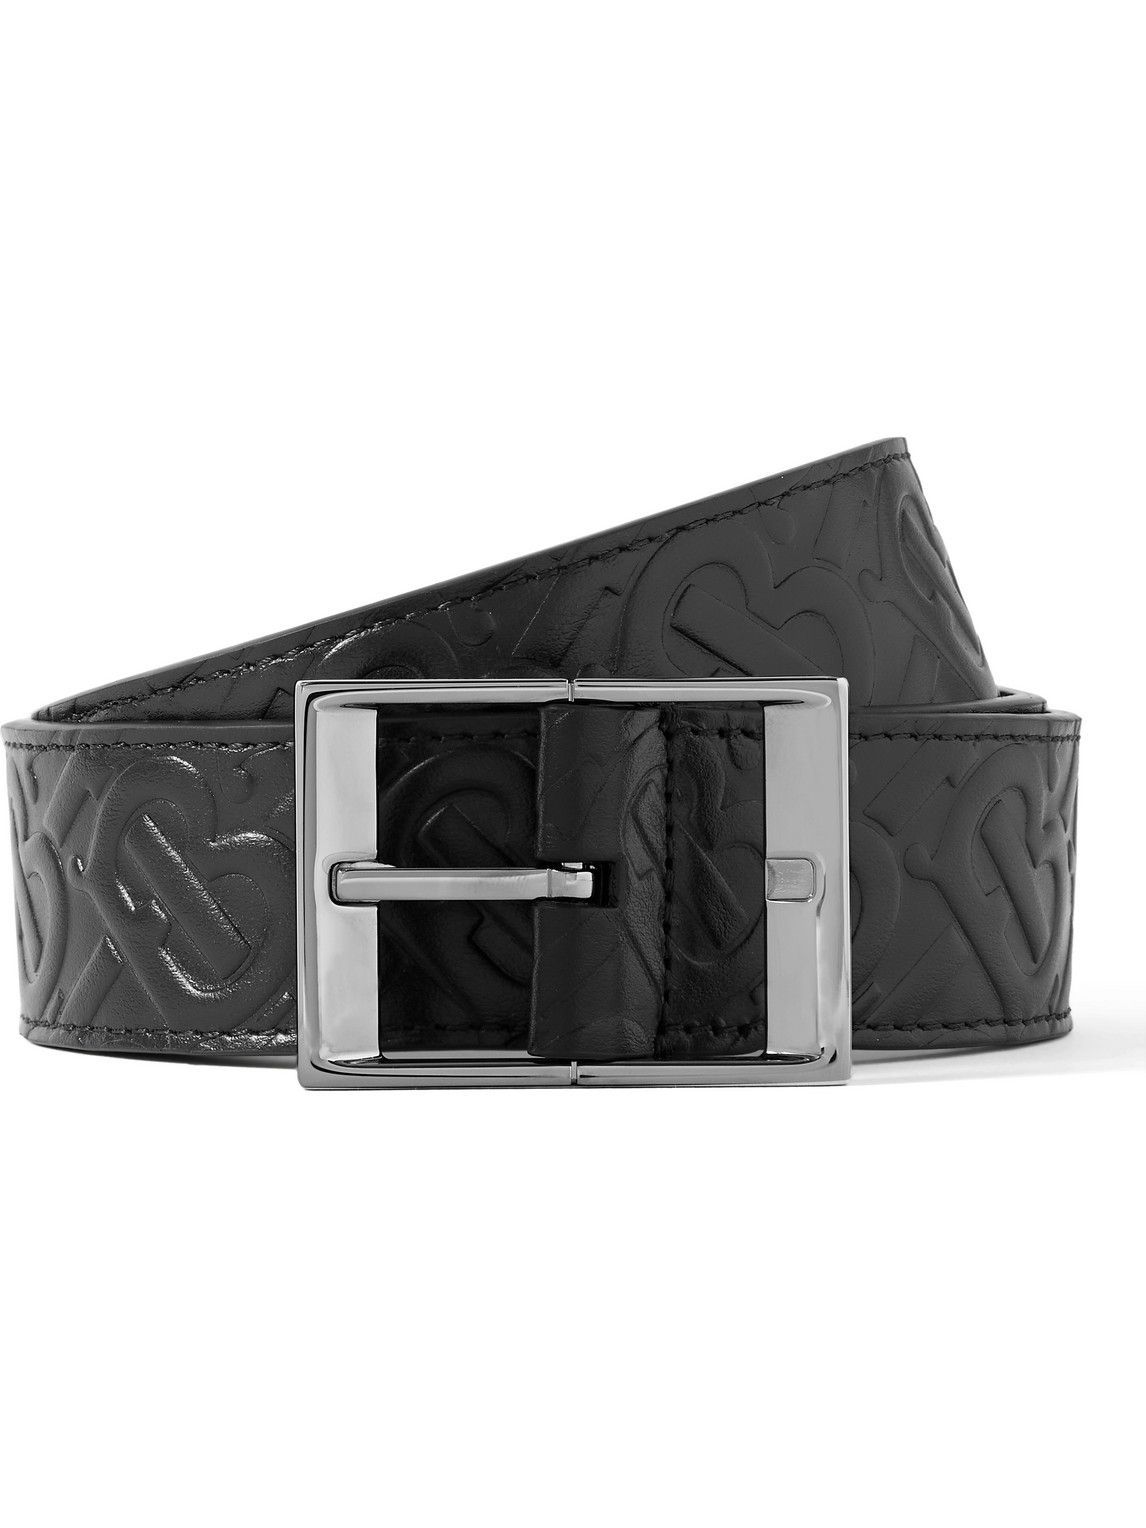 Burberry - 4cm Logo-Embossed Leather Belt - Black